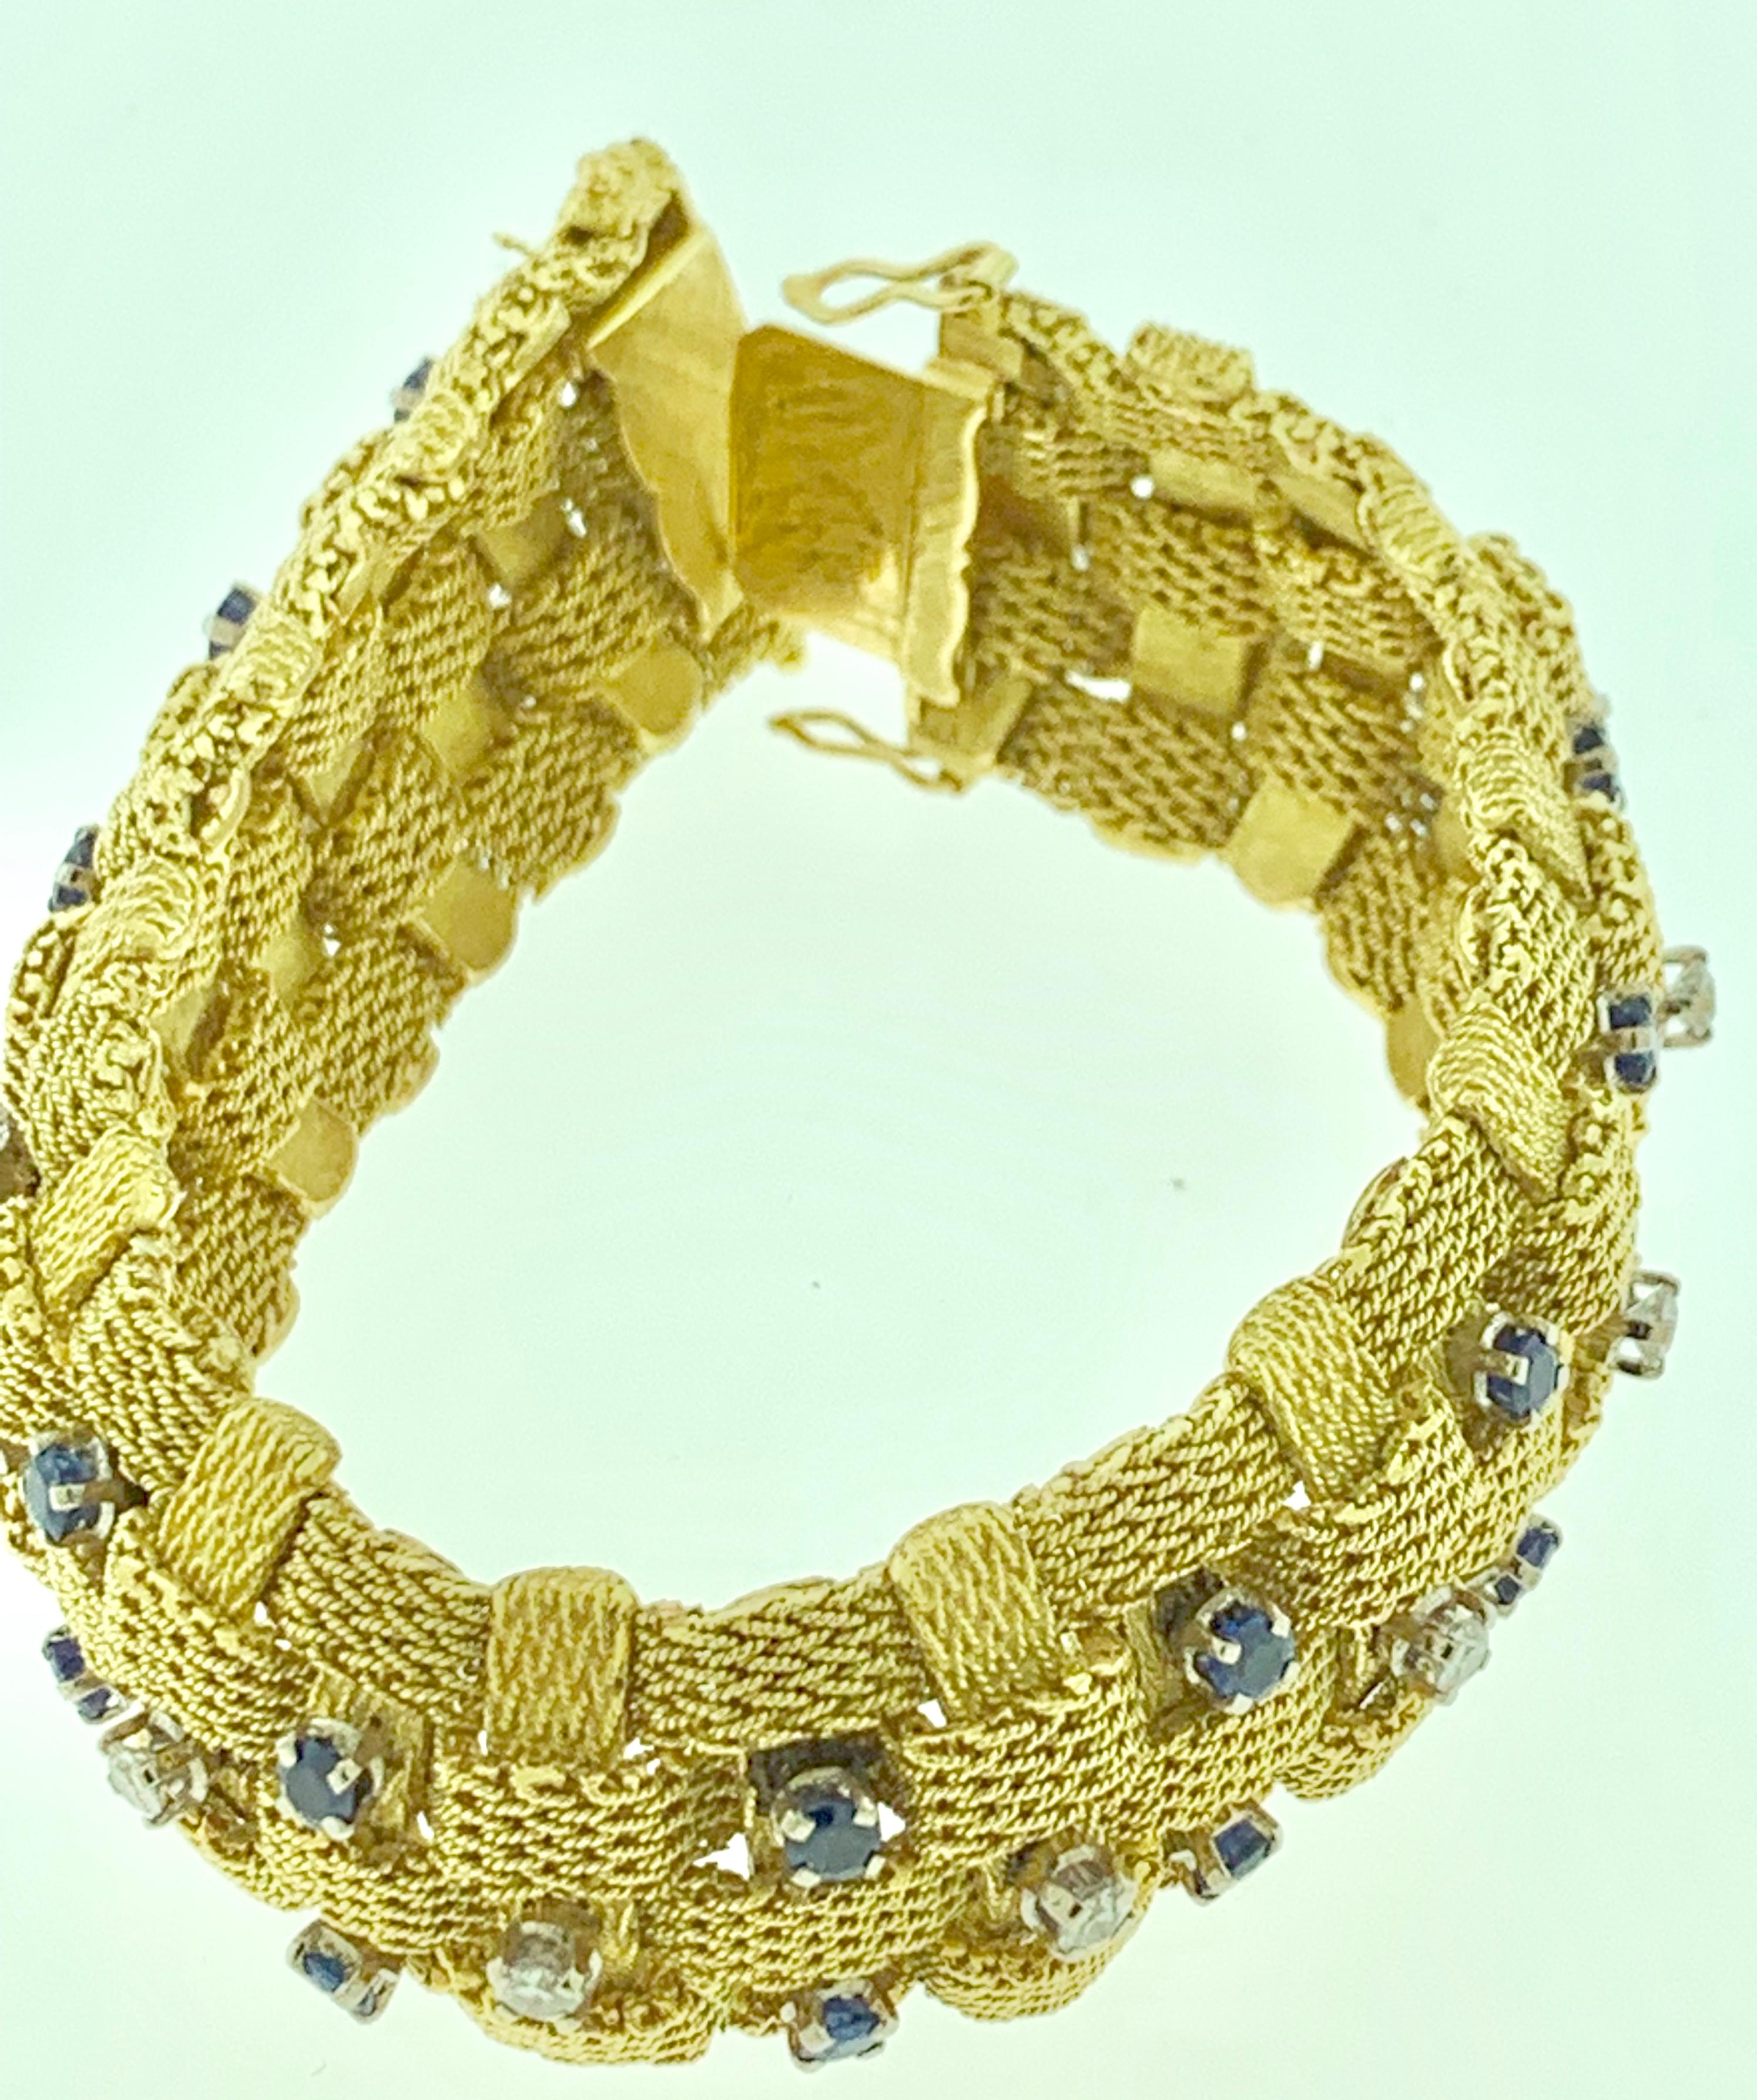 3 Carat Sapphire and 2 Carat Diamond Bracelet in 18 Karat Yellow Gold 116 Gm For Sale 1